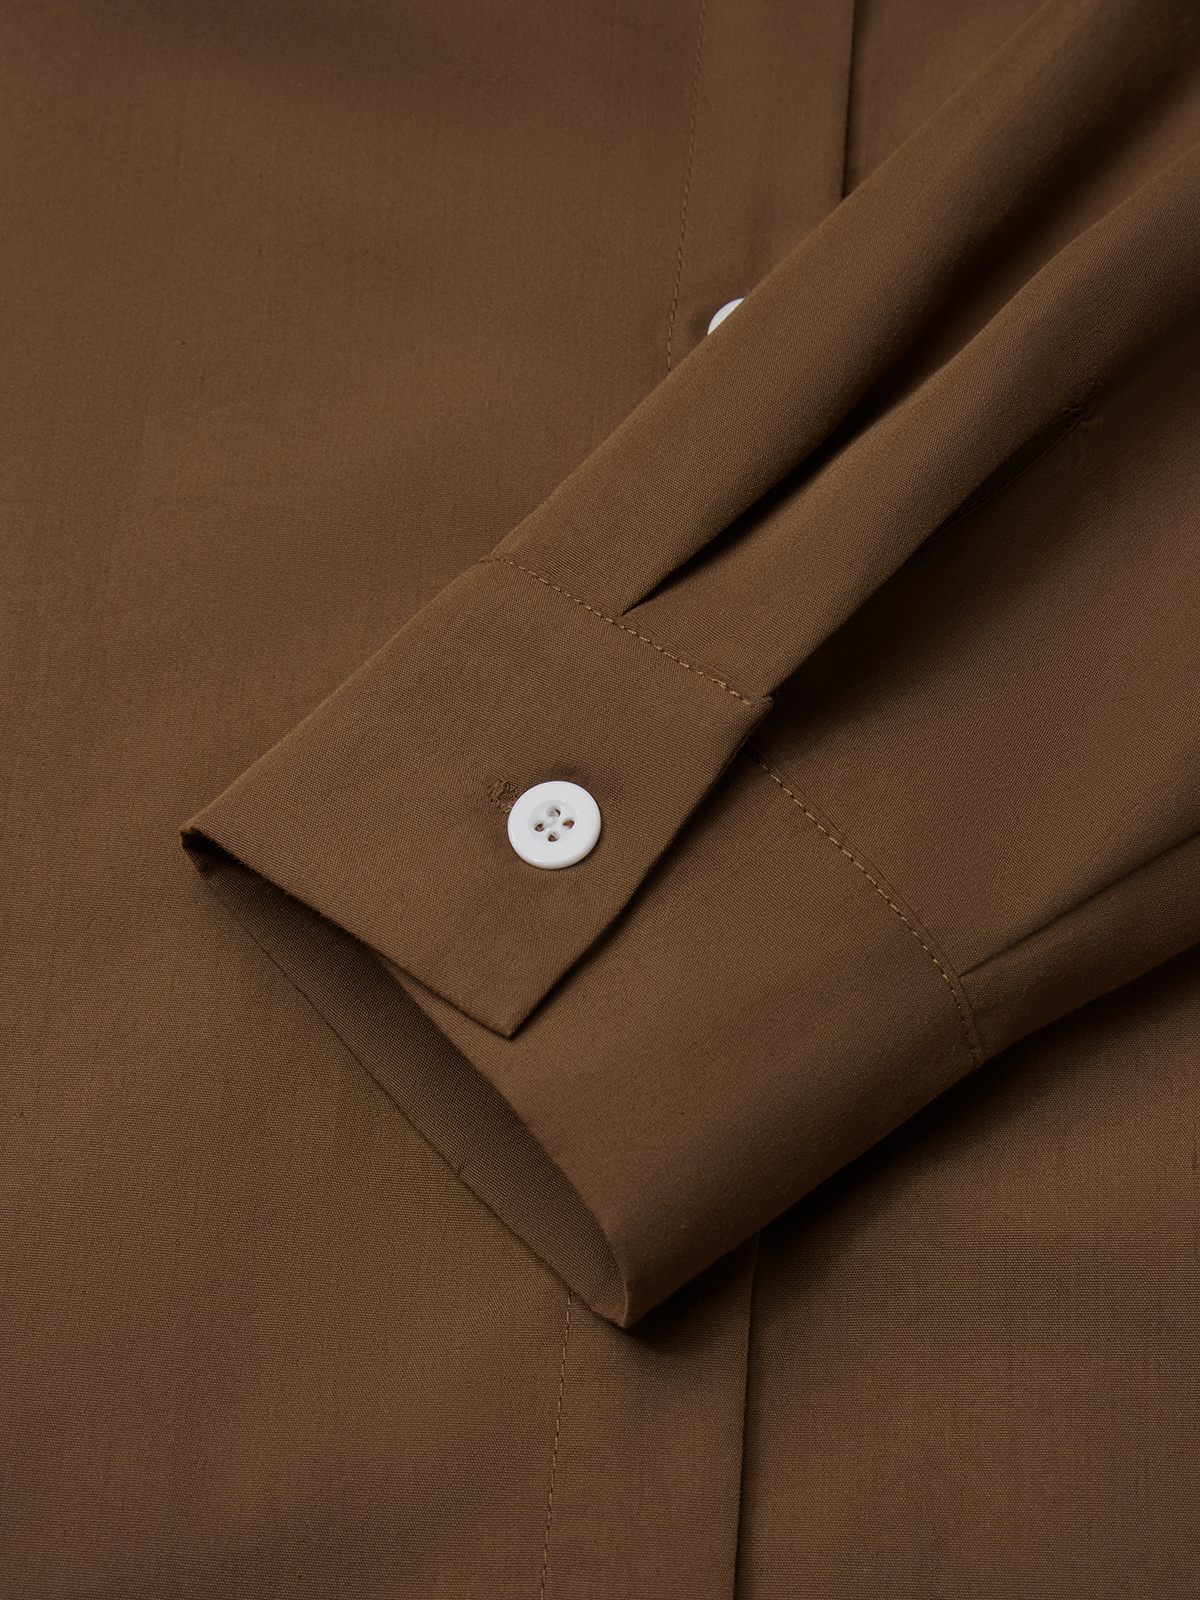 JFN Cotton & Linen Loose Plain Shirt Collar Casual Blouse